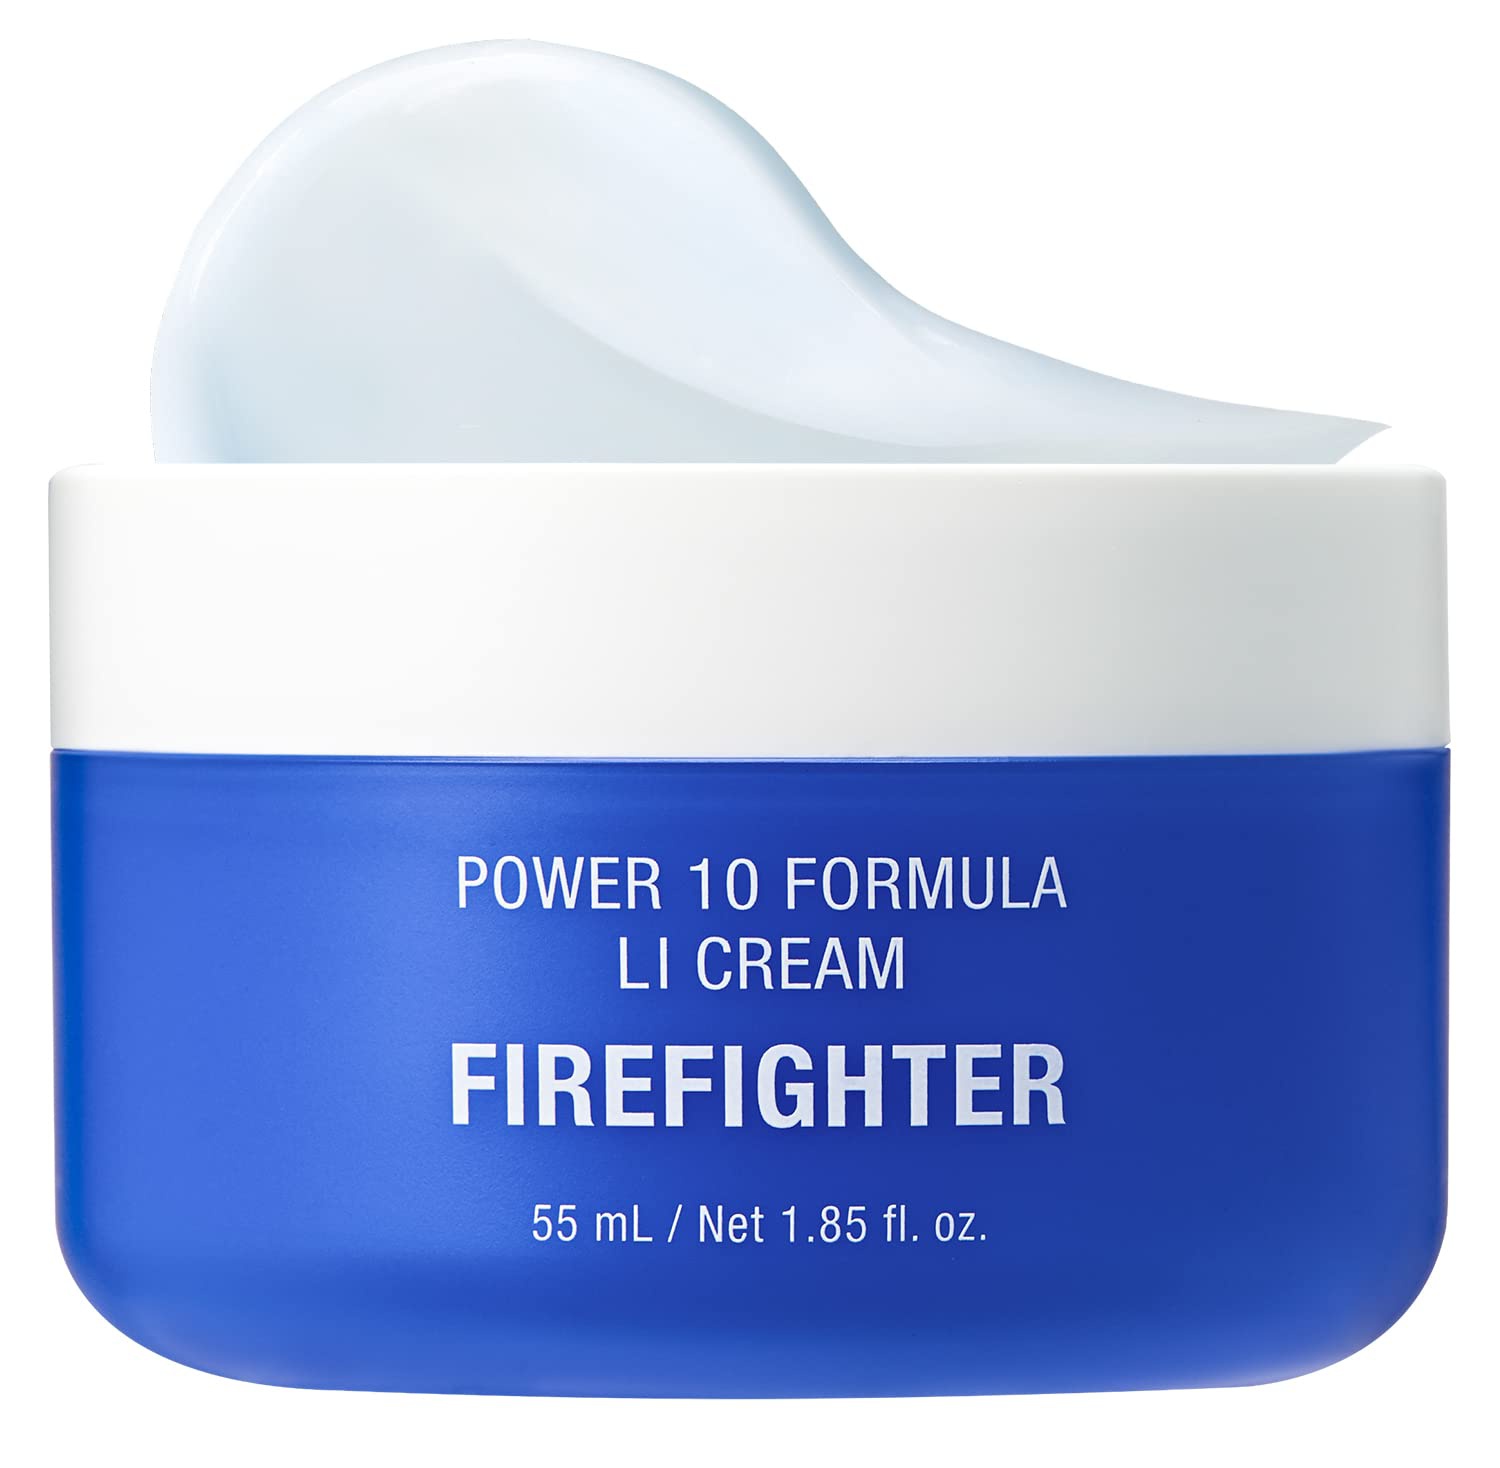 It's Skin Power 10 Formula Li Cream Firefighter